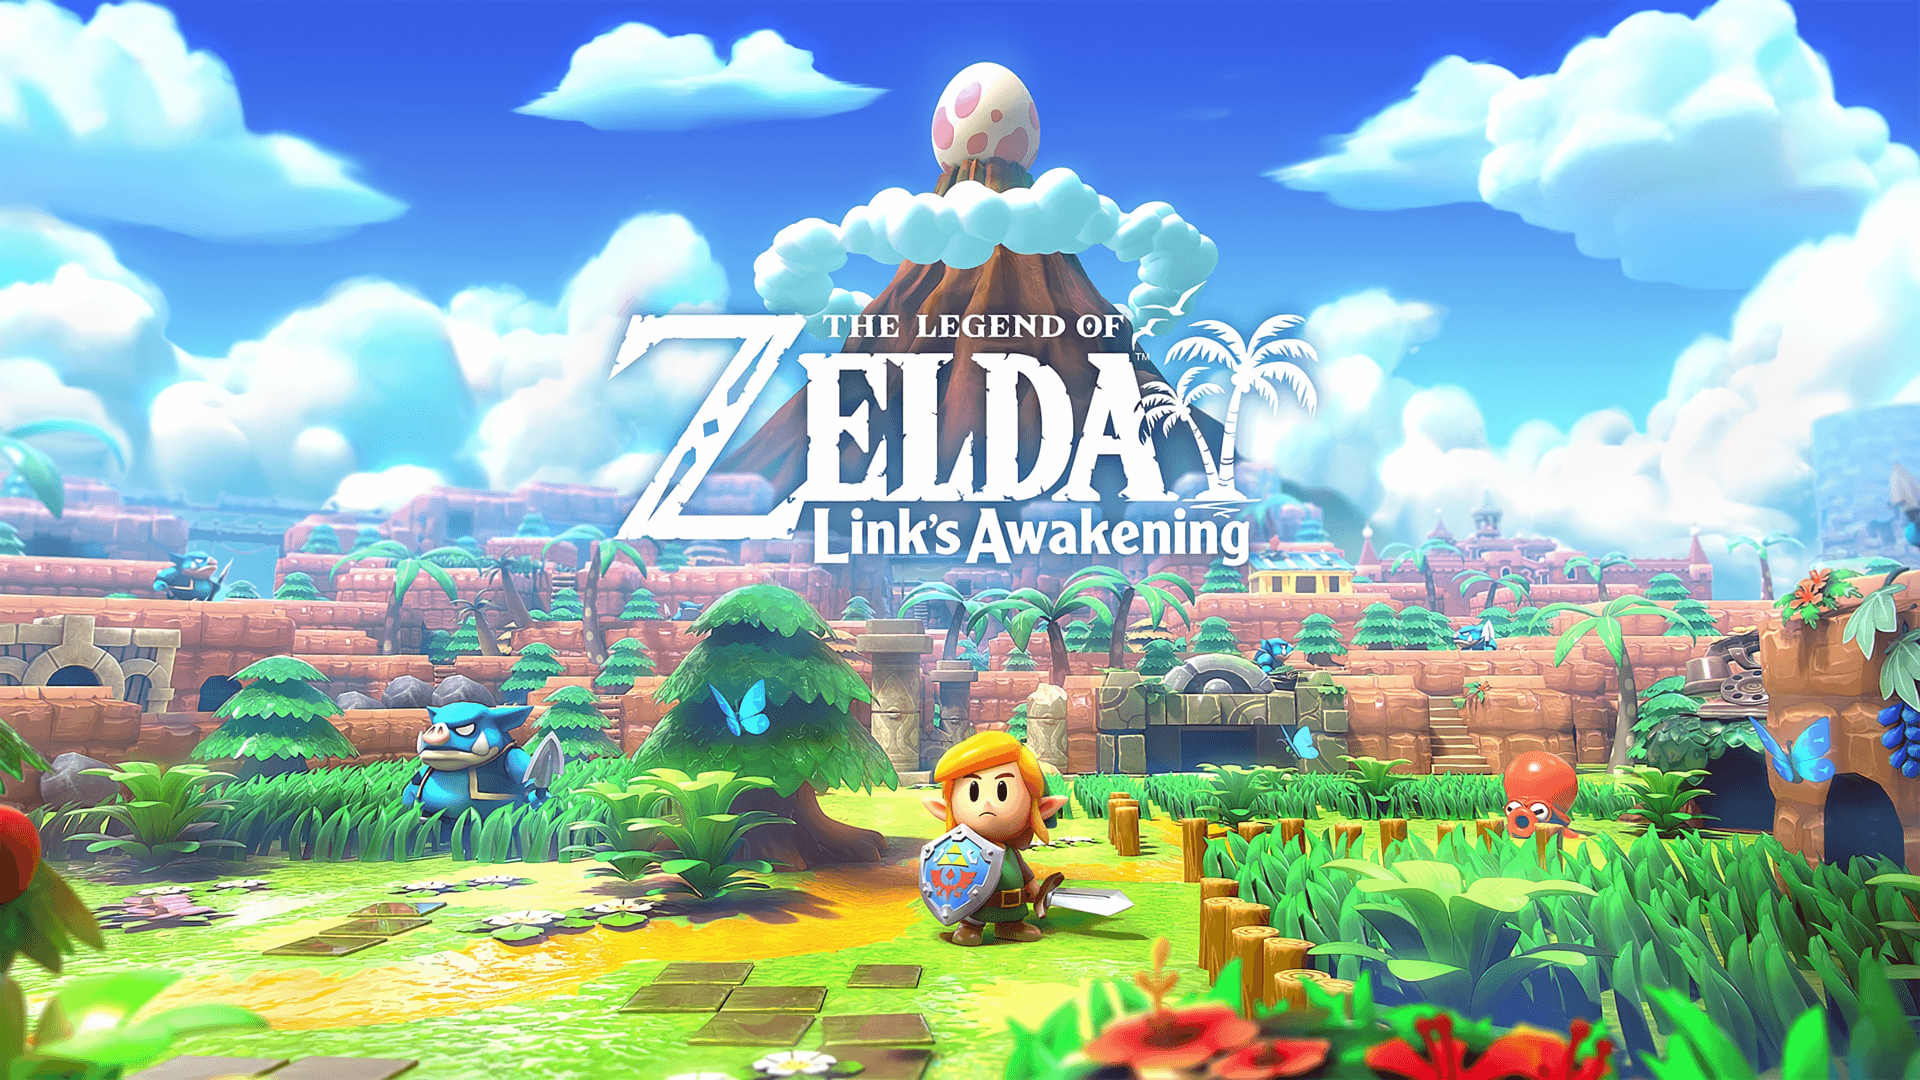 Link's Awakening Wallpaper (Mobile and Desktop)